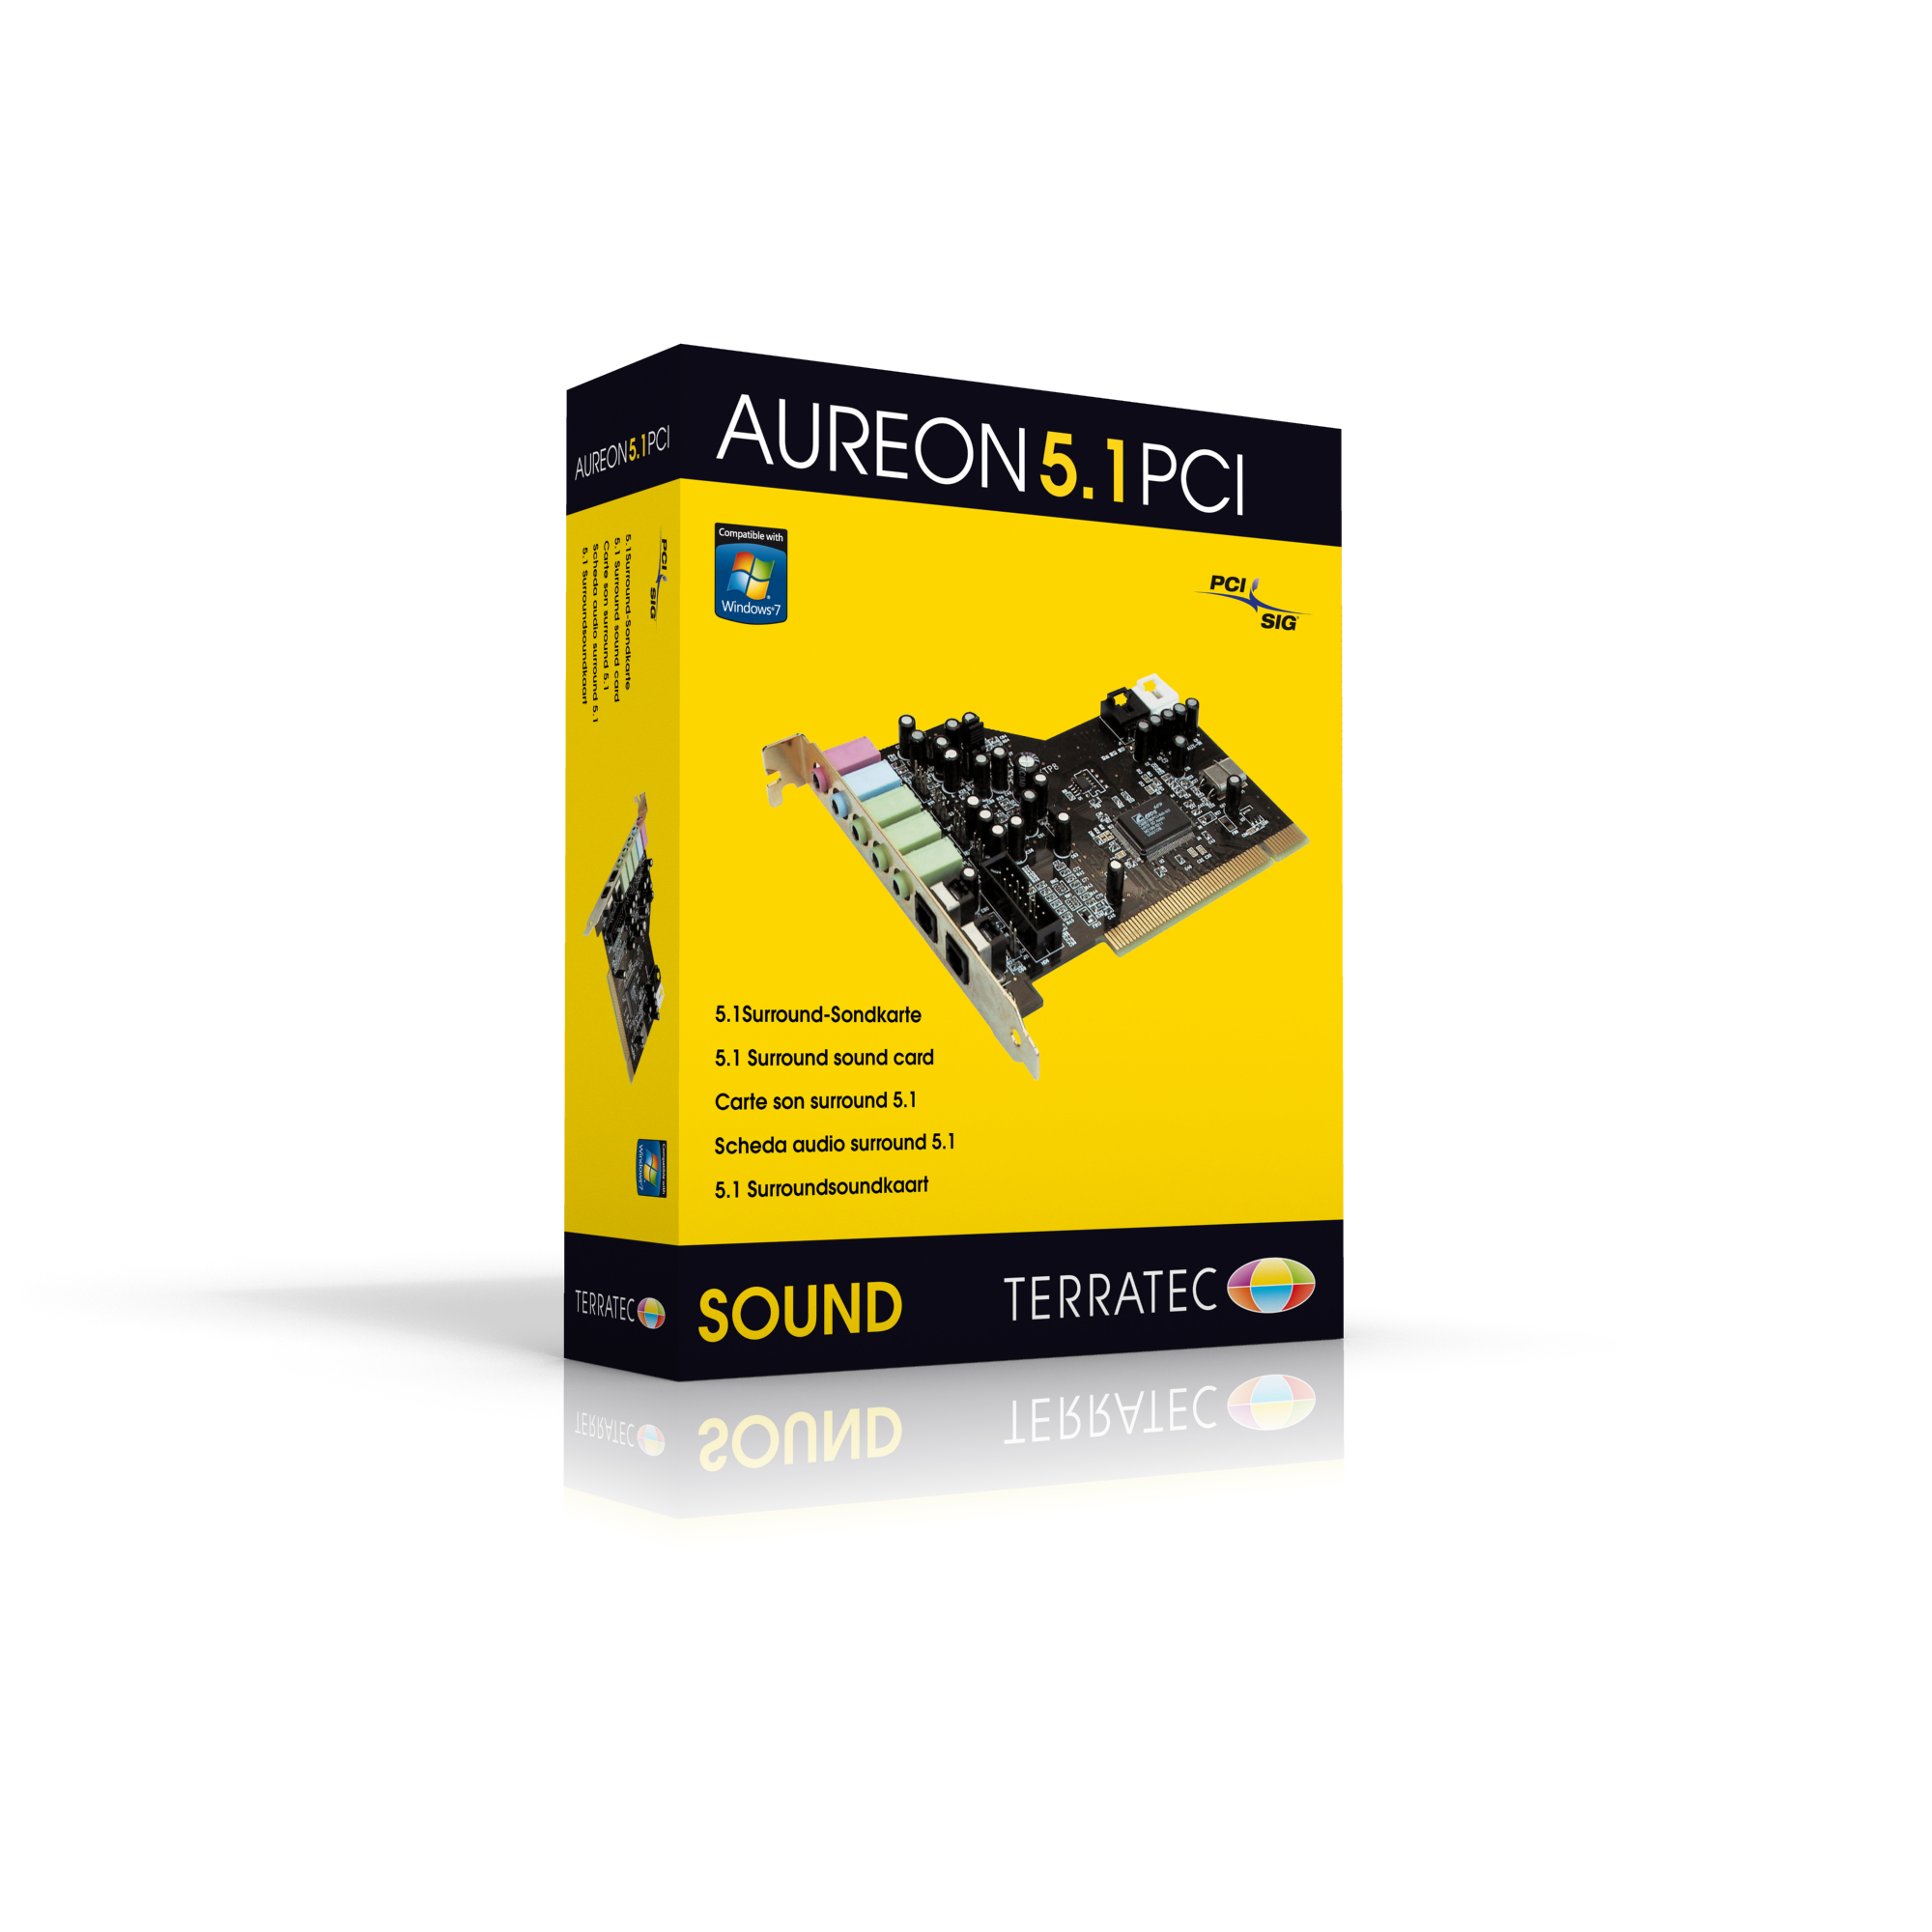 Aureon 5.1 Pci Drivers For Mac